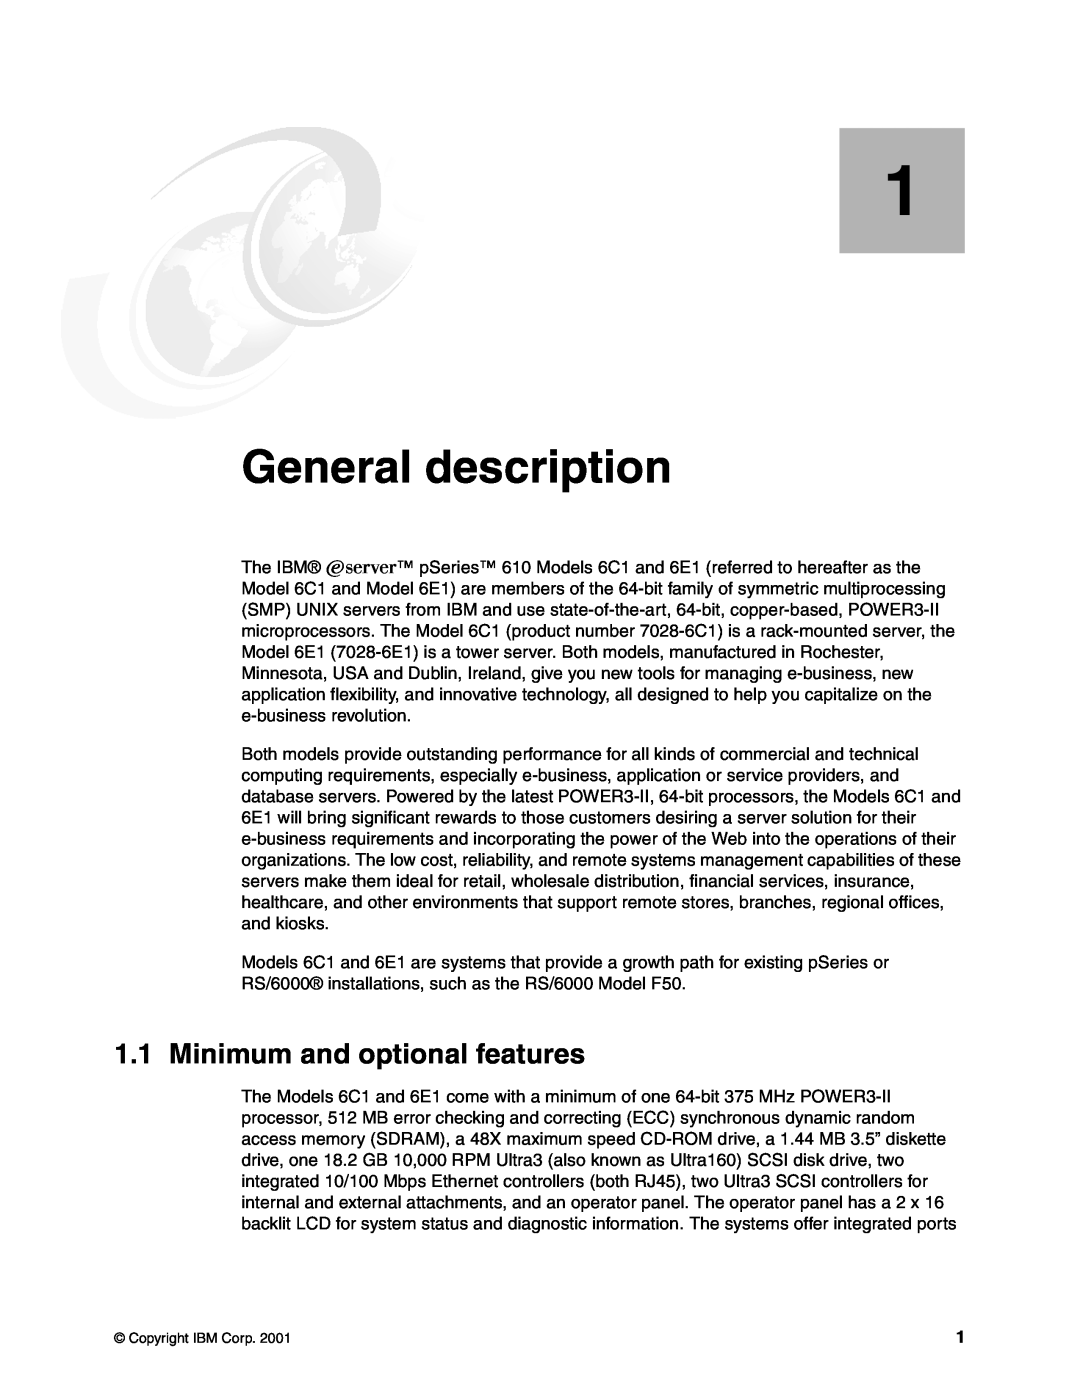 IBM 6E1, 6C1, 610 manual General description, Minimum and optional features 